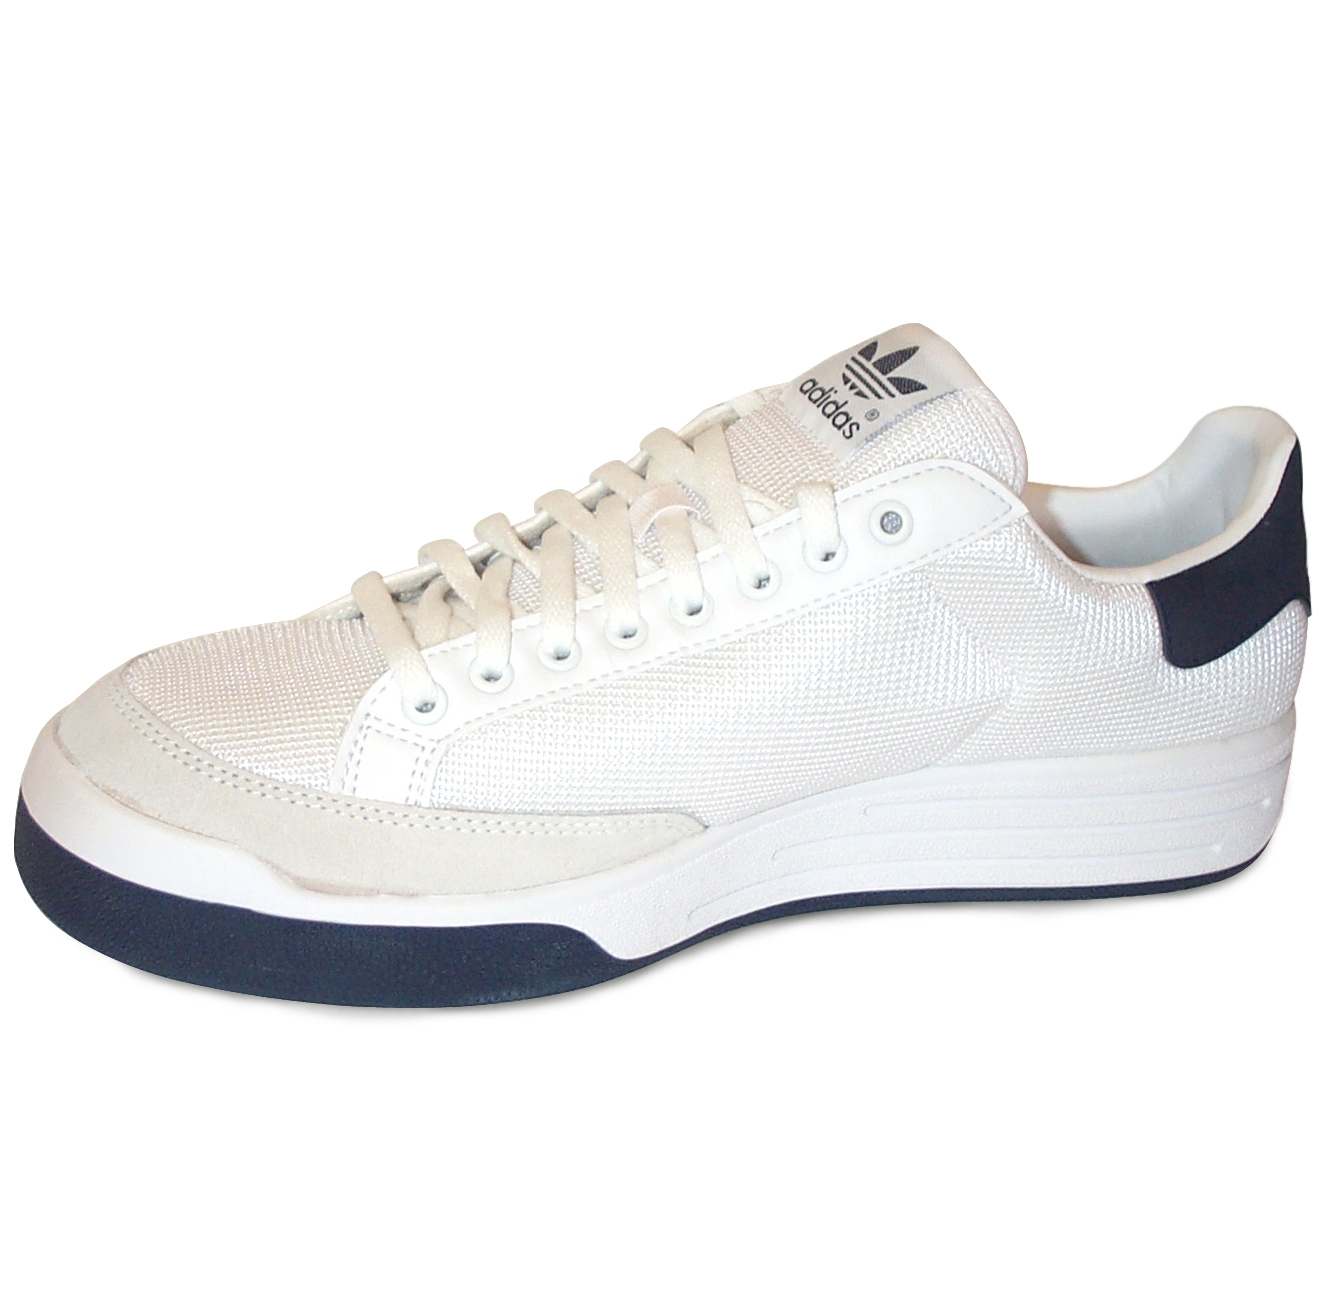 Adidas Rod Laver Super Tennis Shoe 